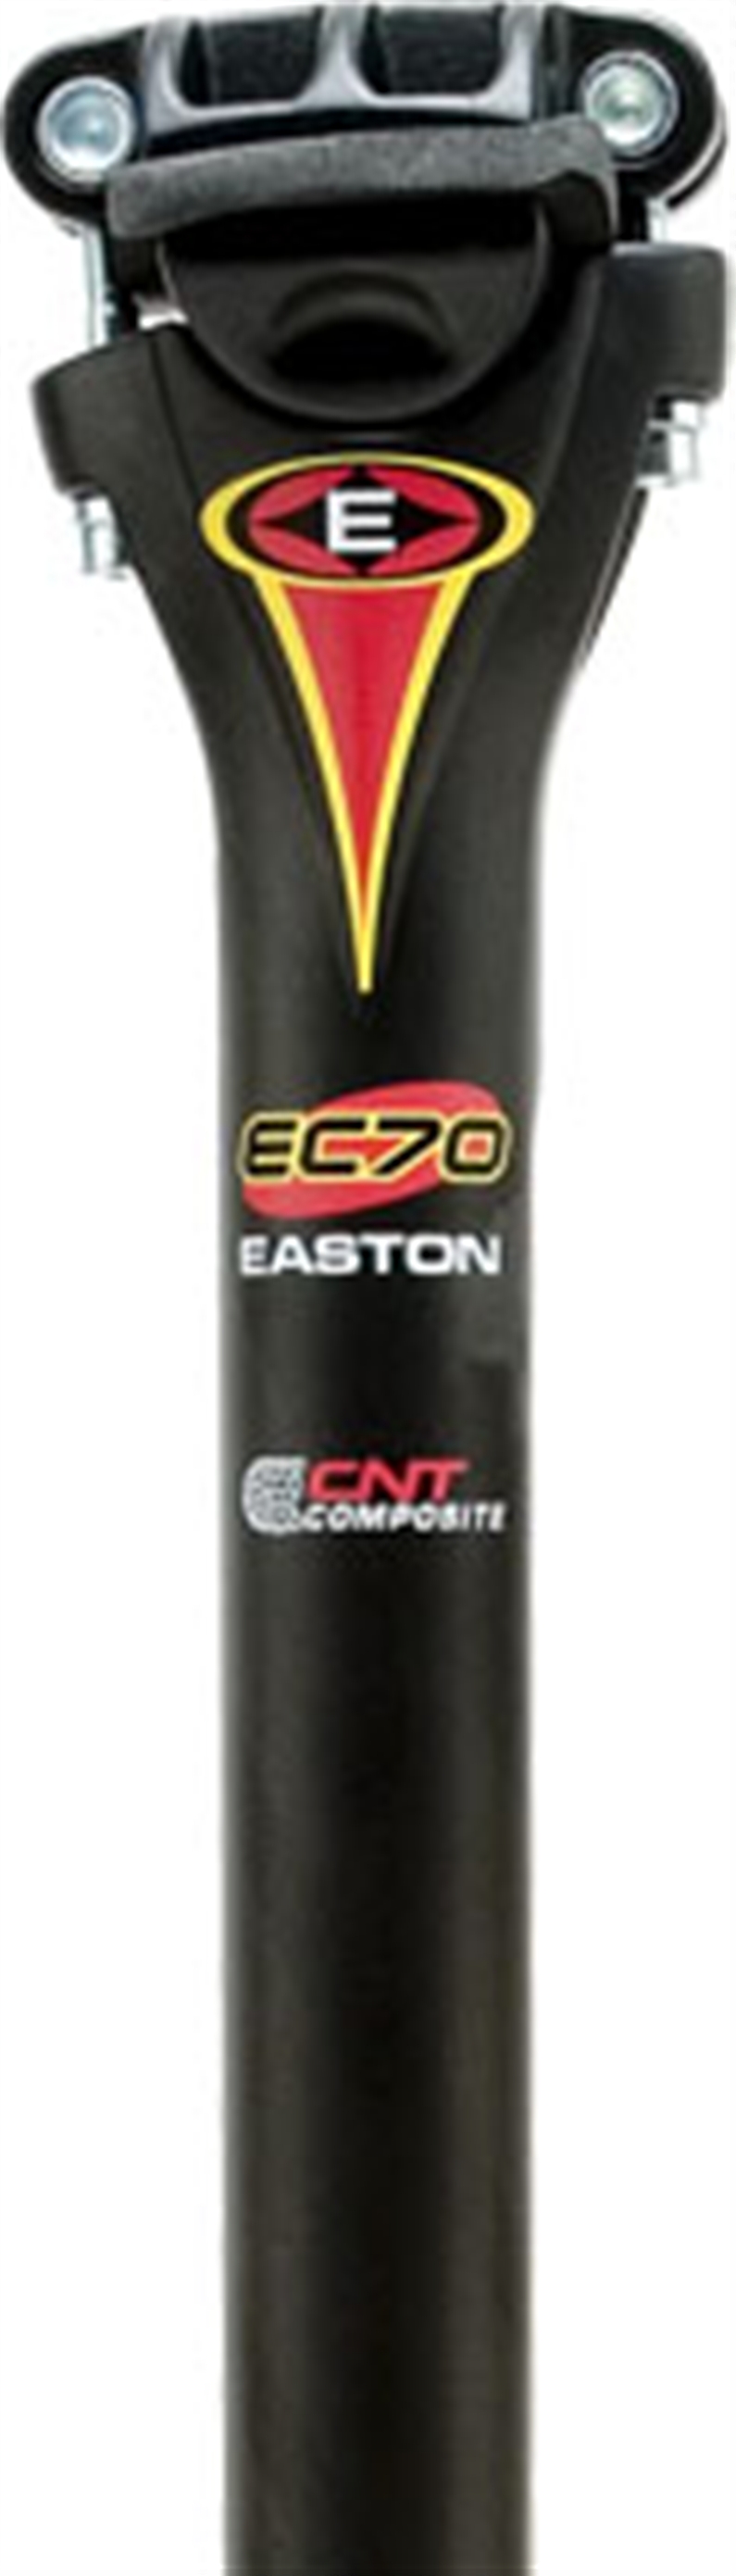 The EC70 zero-offset seat post is a carbon-fiber work of art. Eastons cutting-edge CNT-composite